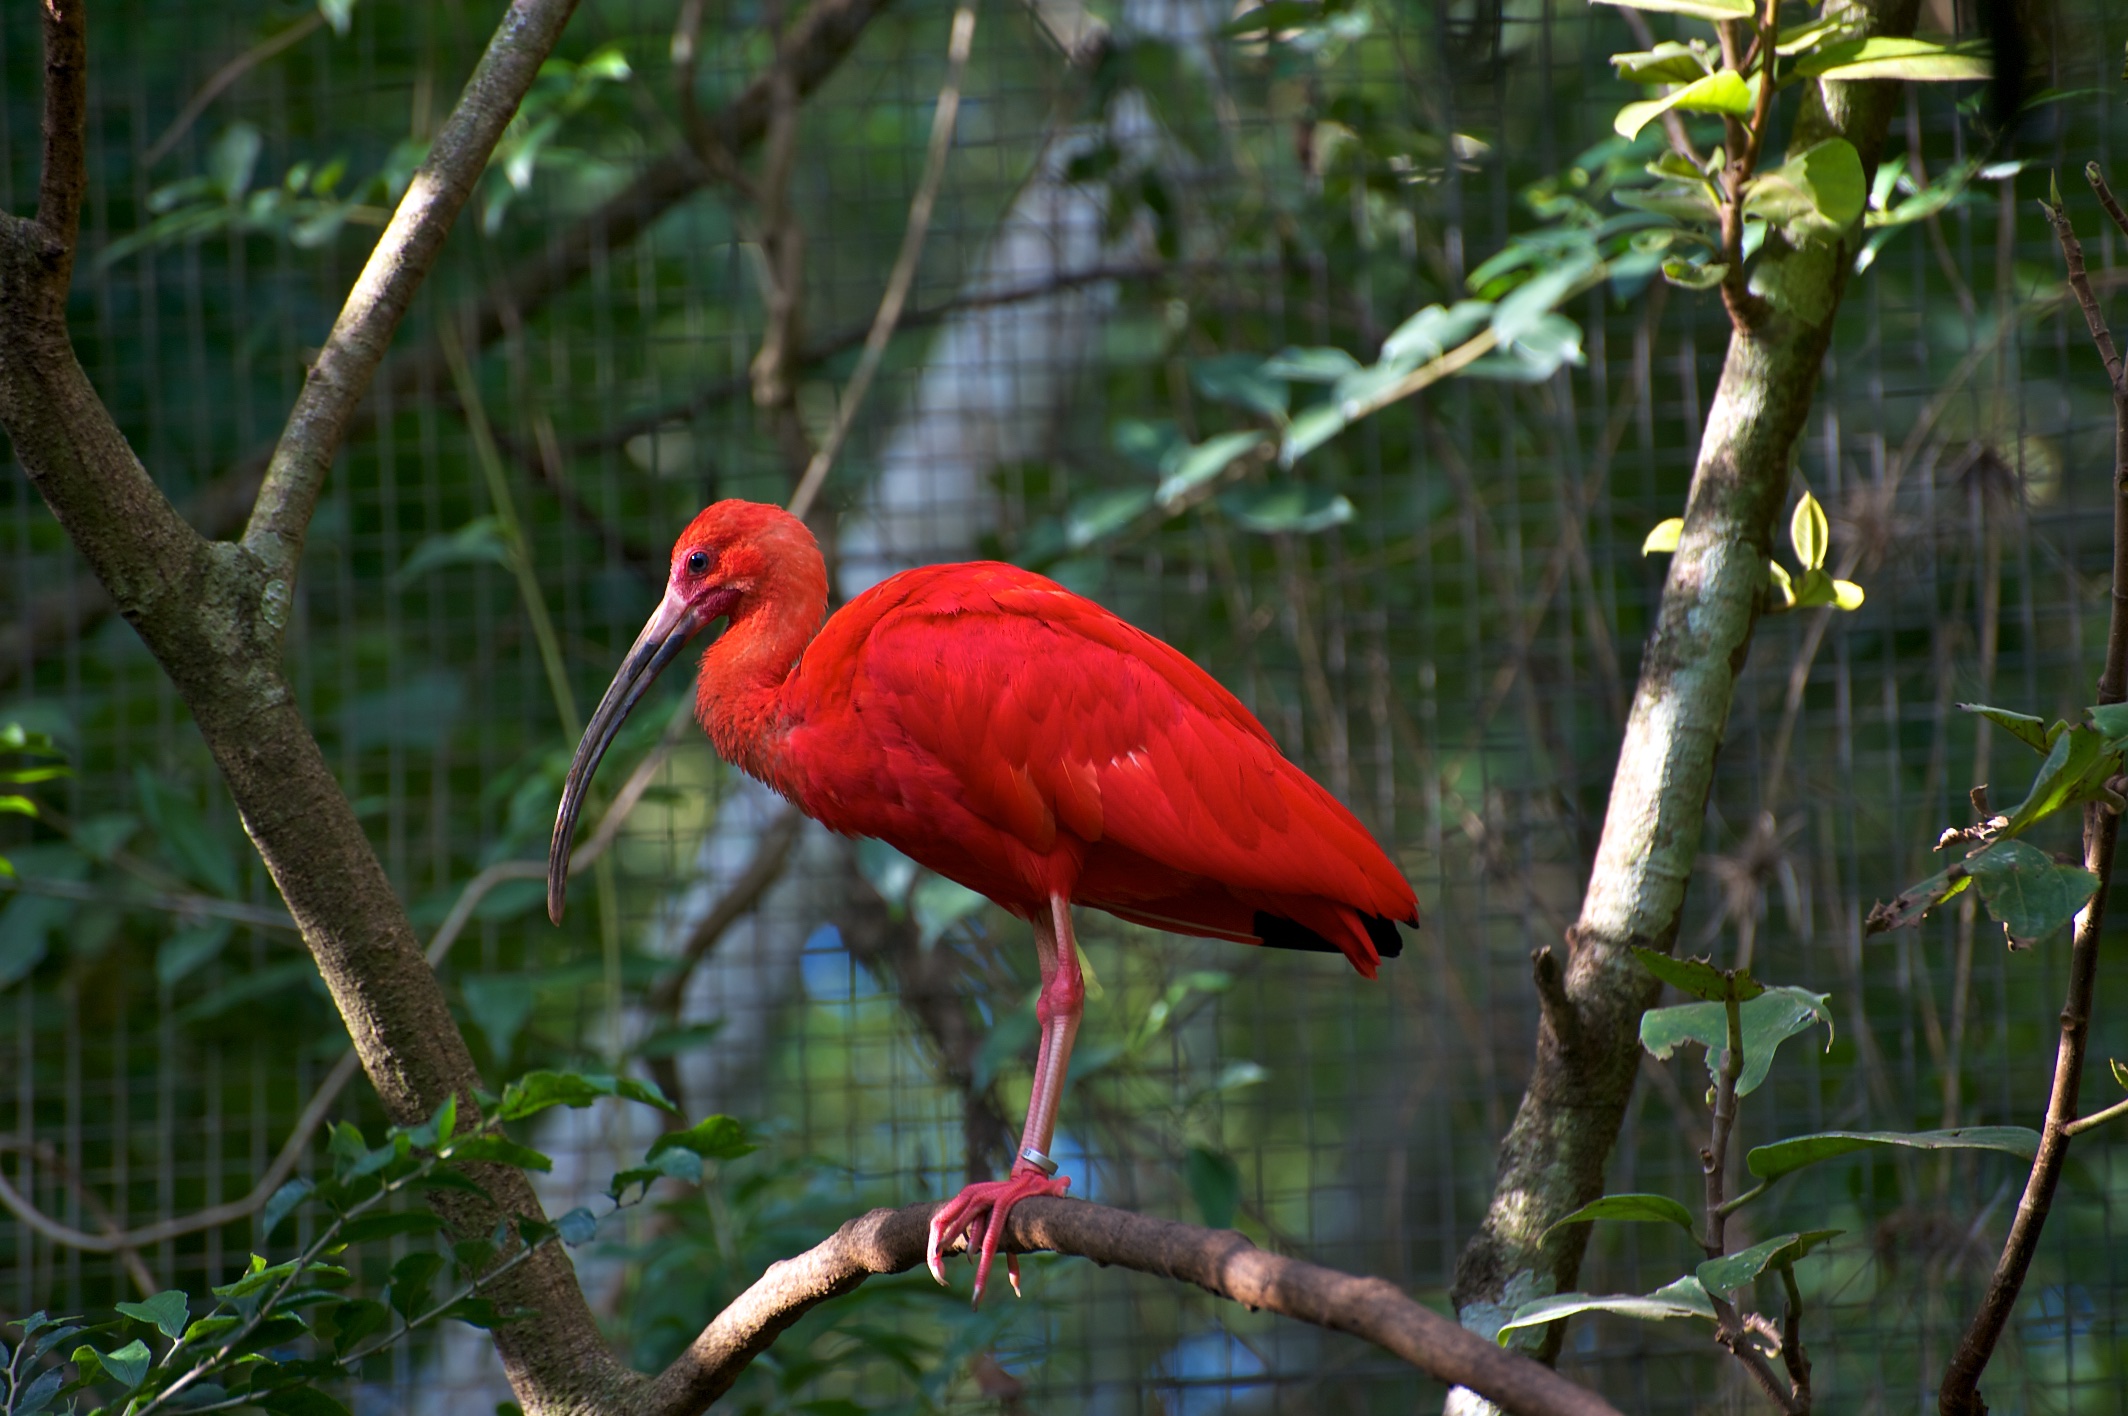  Scarlet ibis, Bird sanctuary, Iguazu National Park, Brazil 